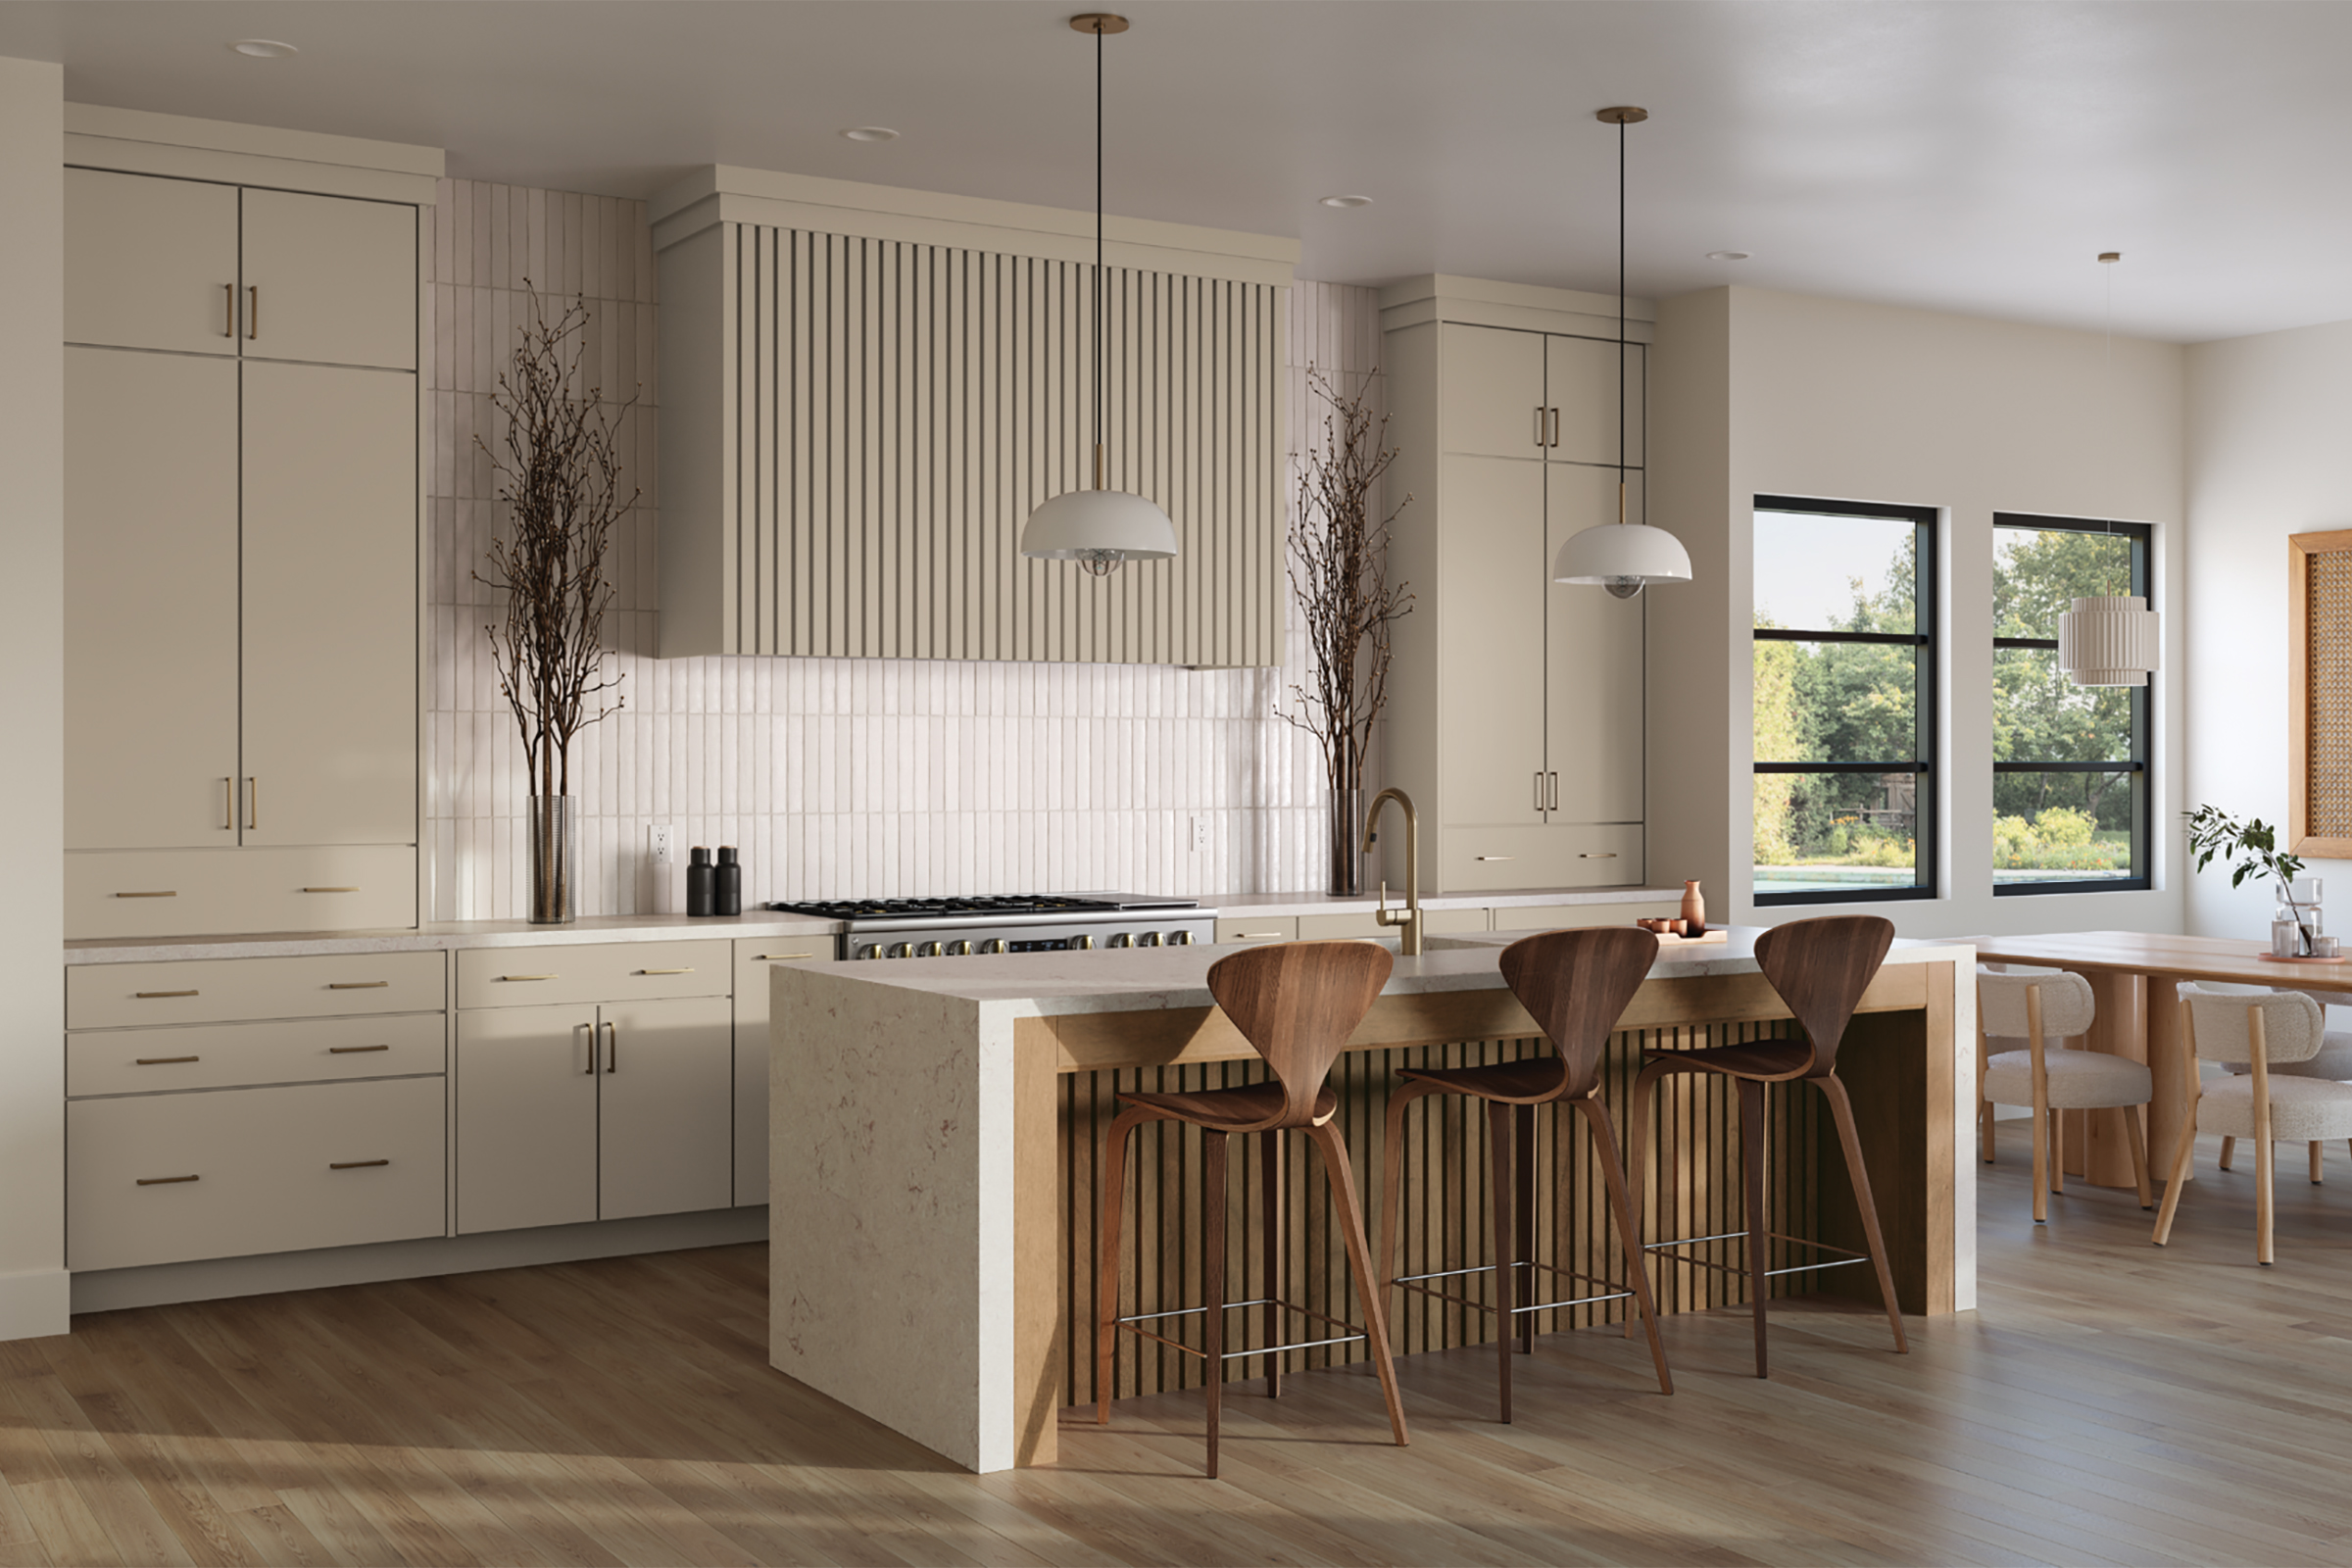 Japandi-style kitchen design with Overcast grey cabinets and Japandi kitchen island